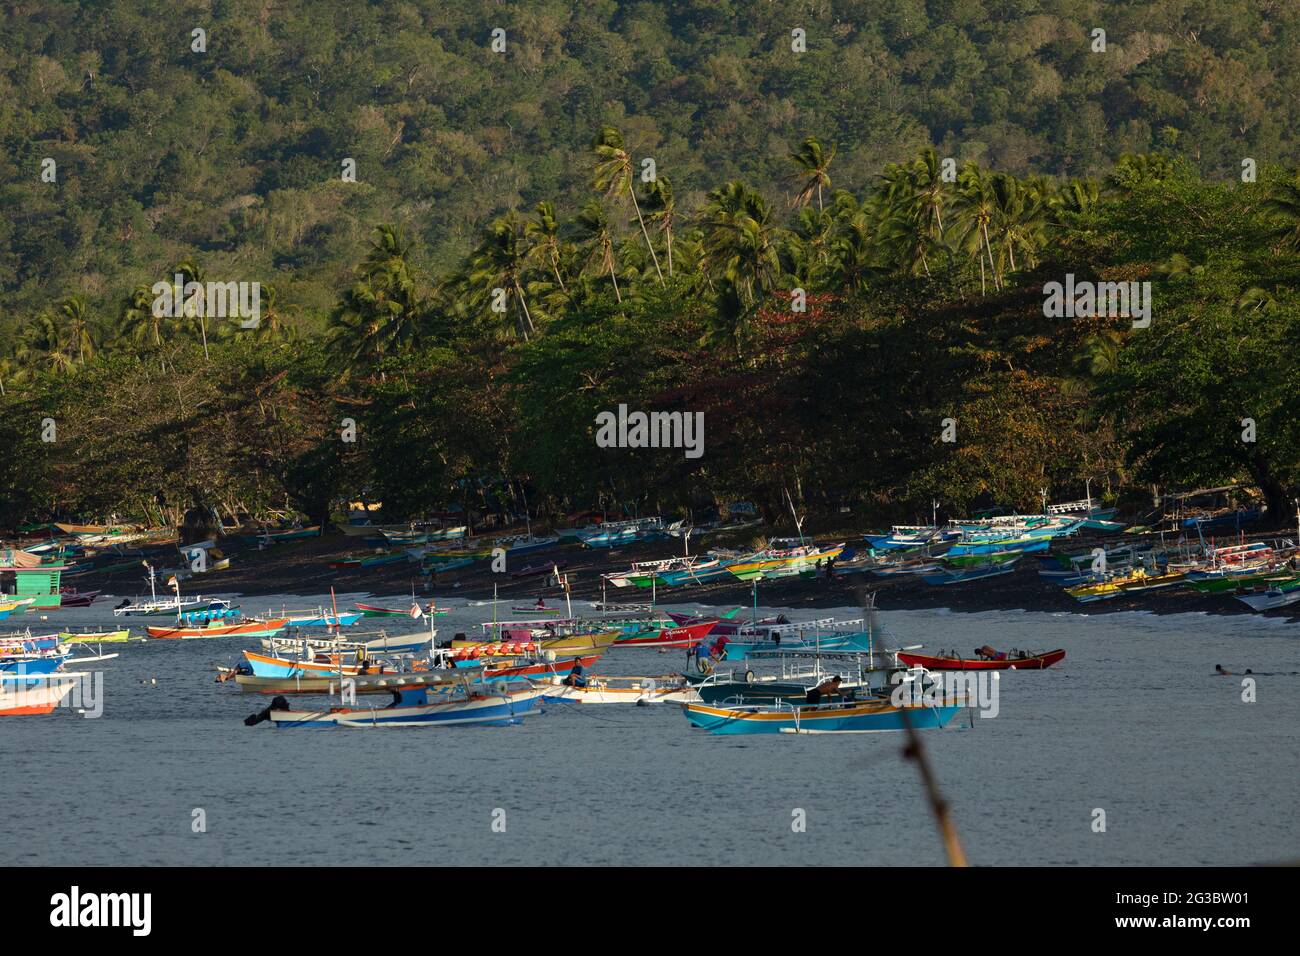 Batu Putih, Indonesia - September 30, 2019: Dozens of colorful fishing boats moored near the beach, Tangkoko Nature Park, Sulawesi, Indonesia Stock Photo